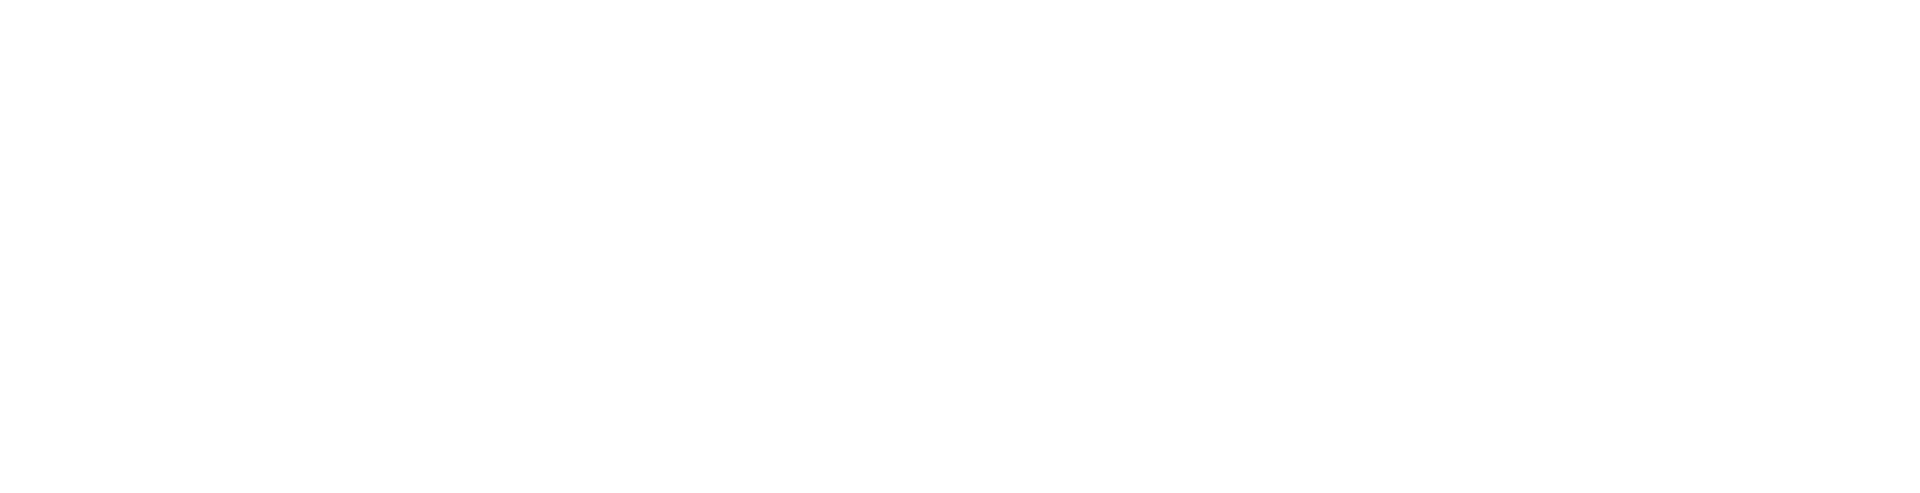 Motives International Website